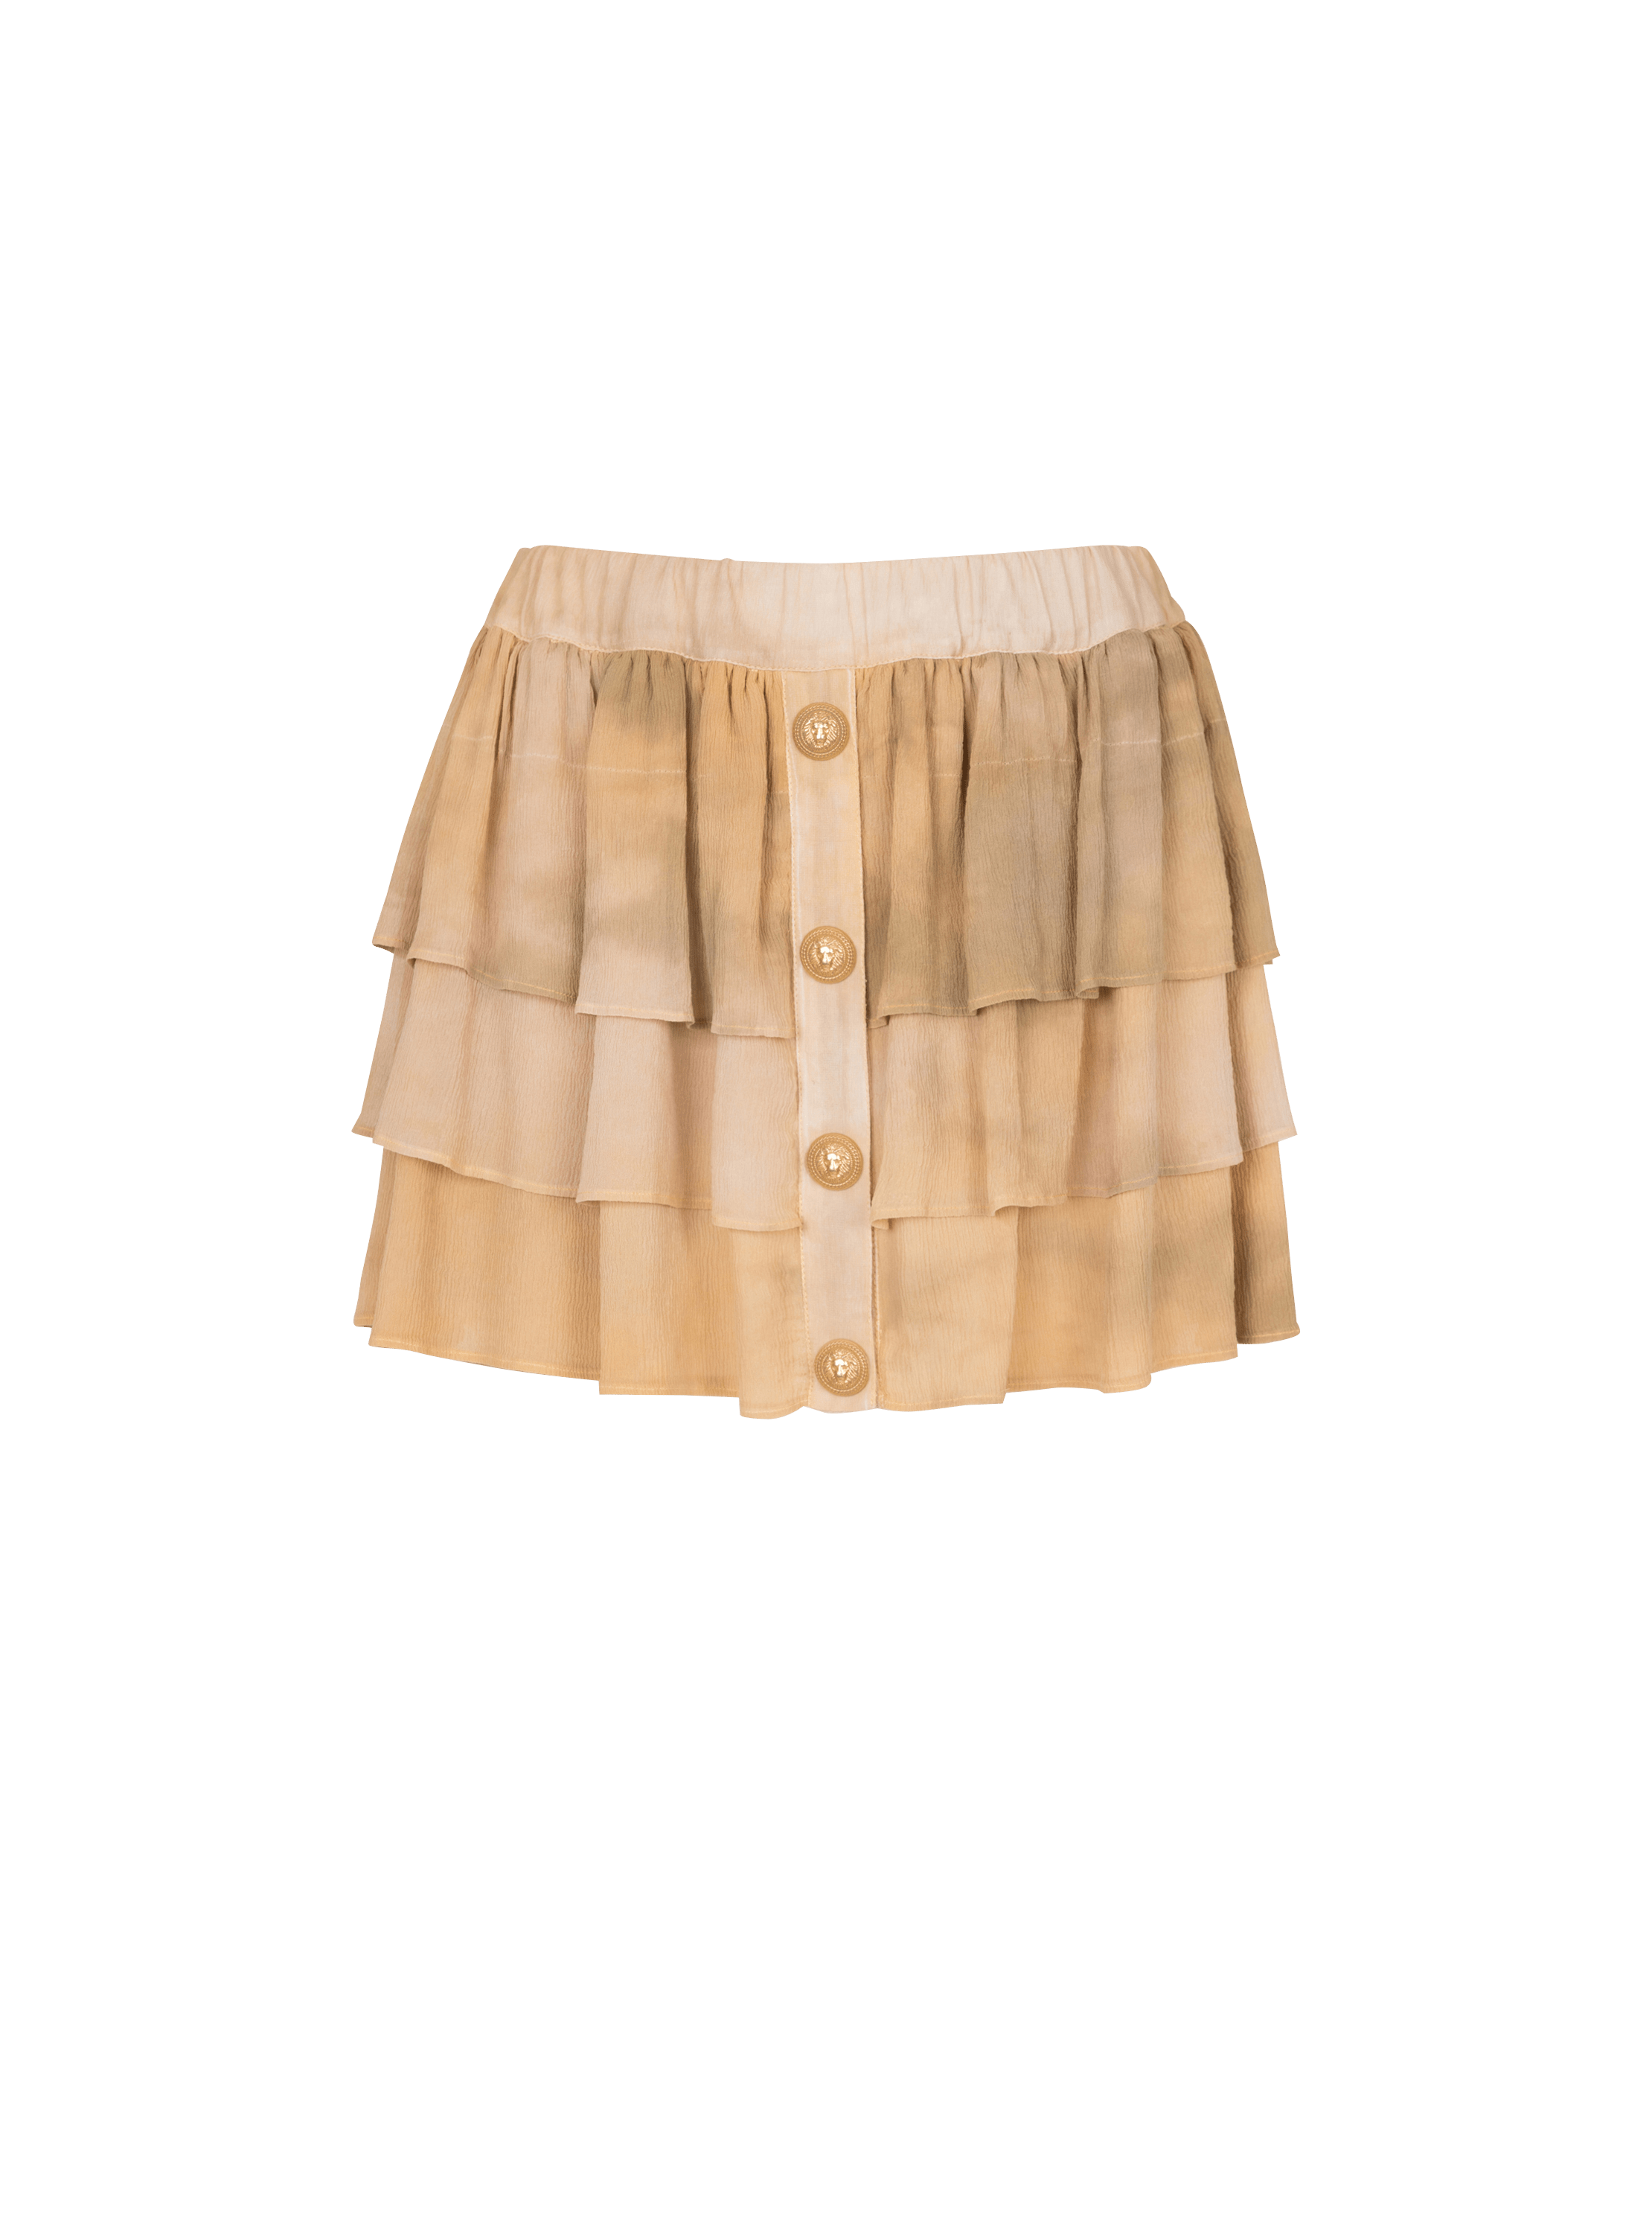 Tie-dye silk ruffle skirt